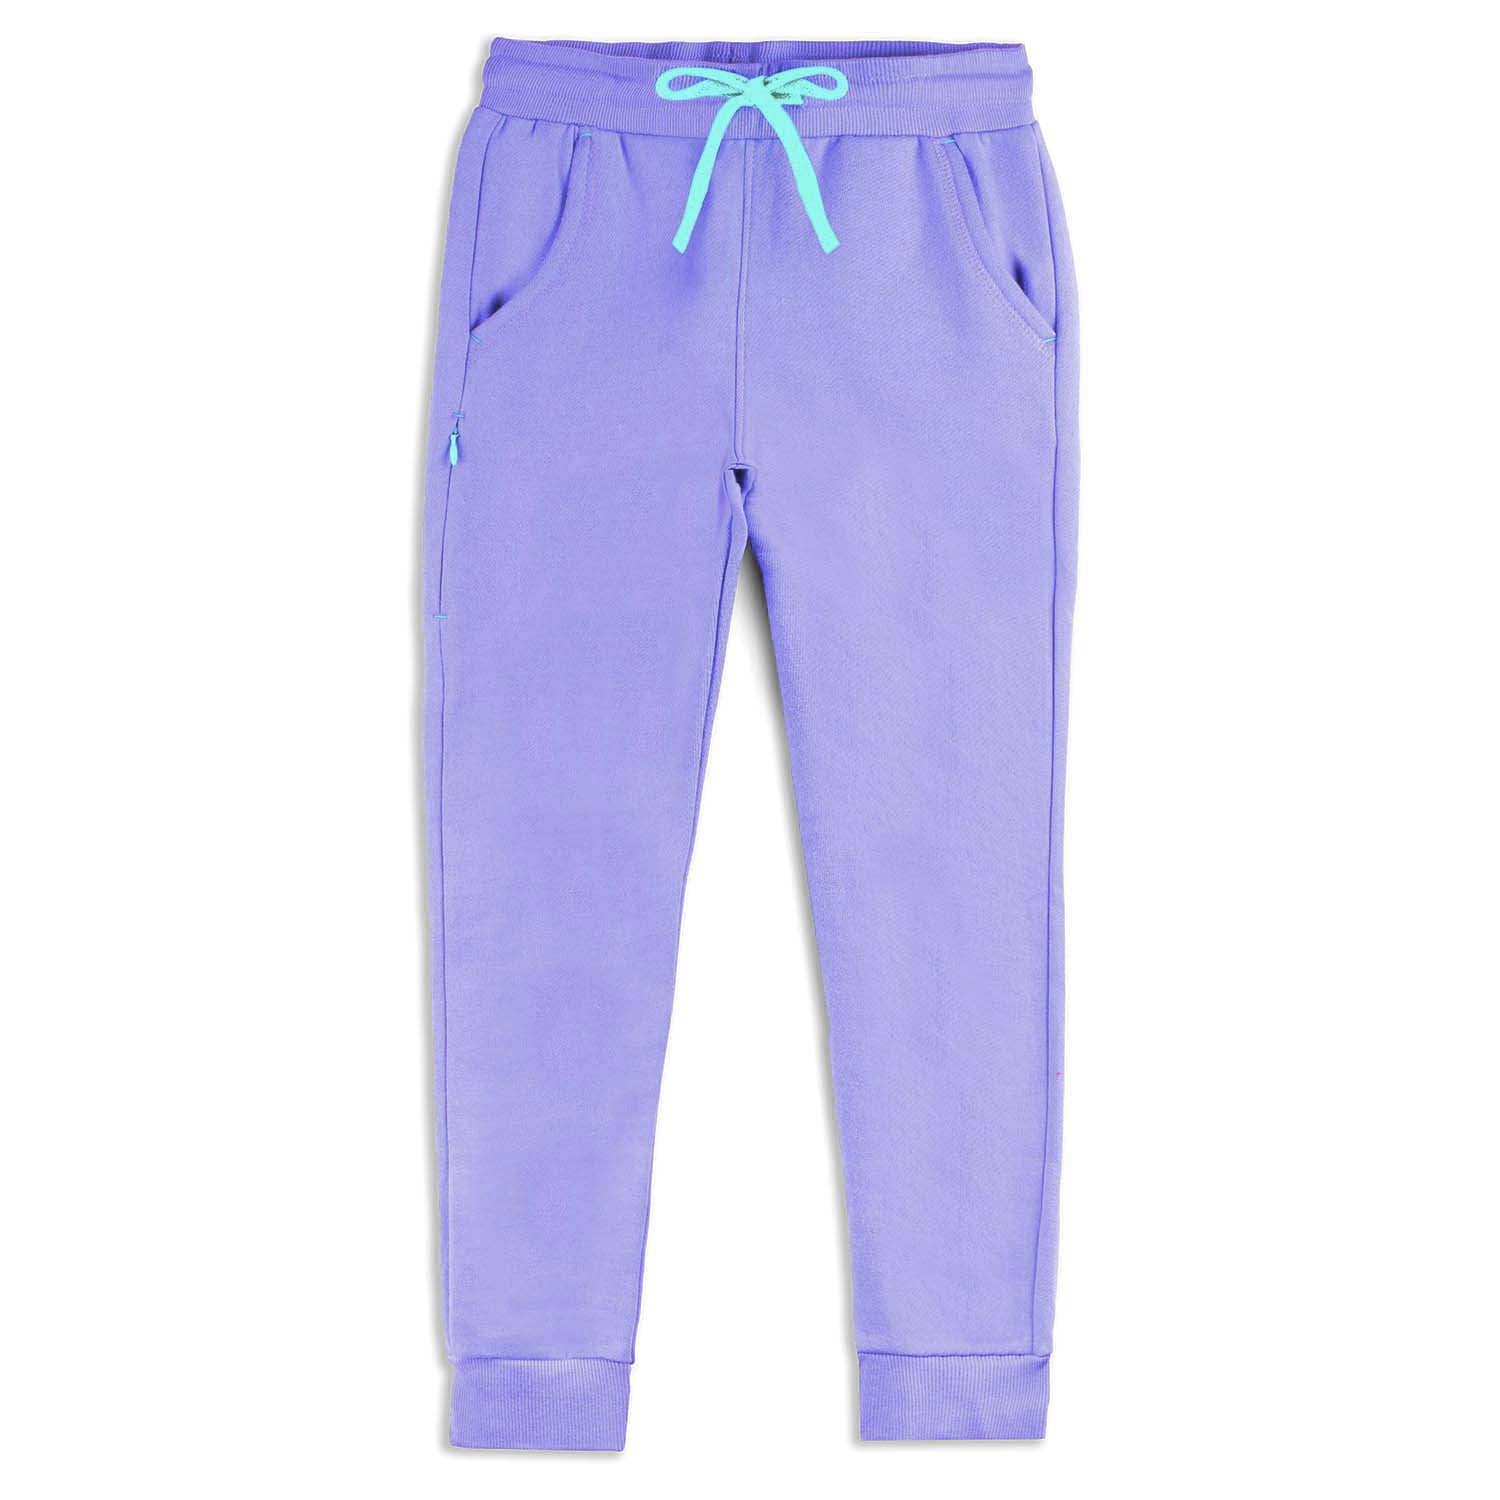 Secret treasures sleepwear essentials, gray pink and white print, joggers